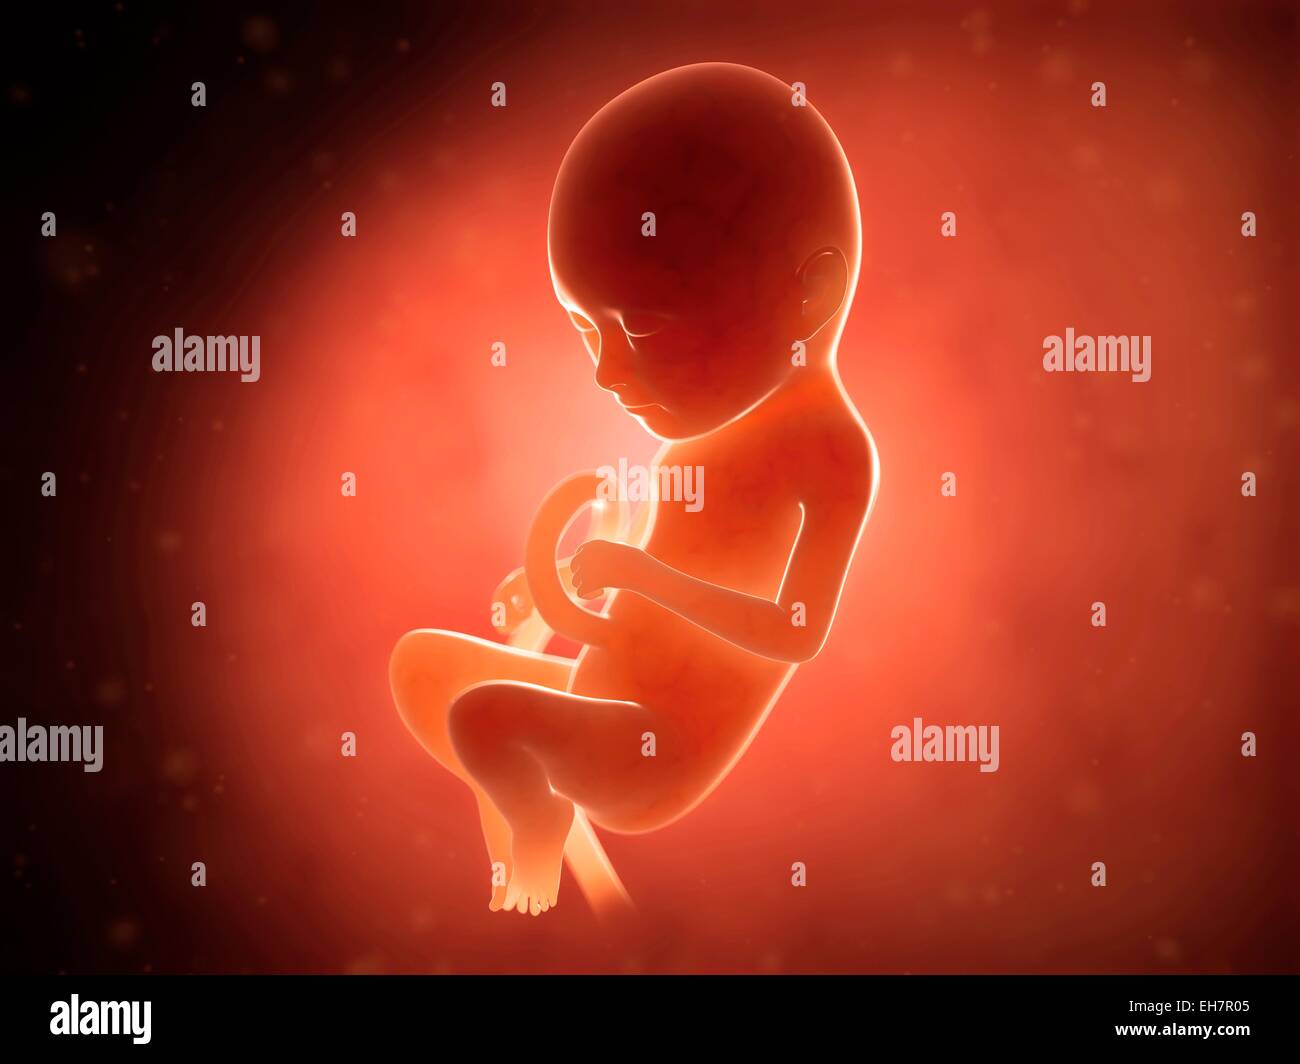 Human fetus at 9 months, illustration Stock Photo